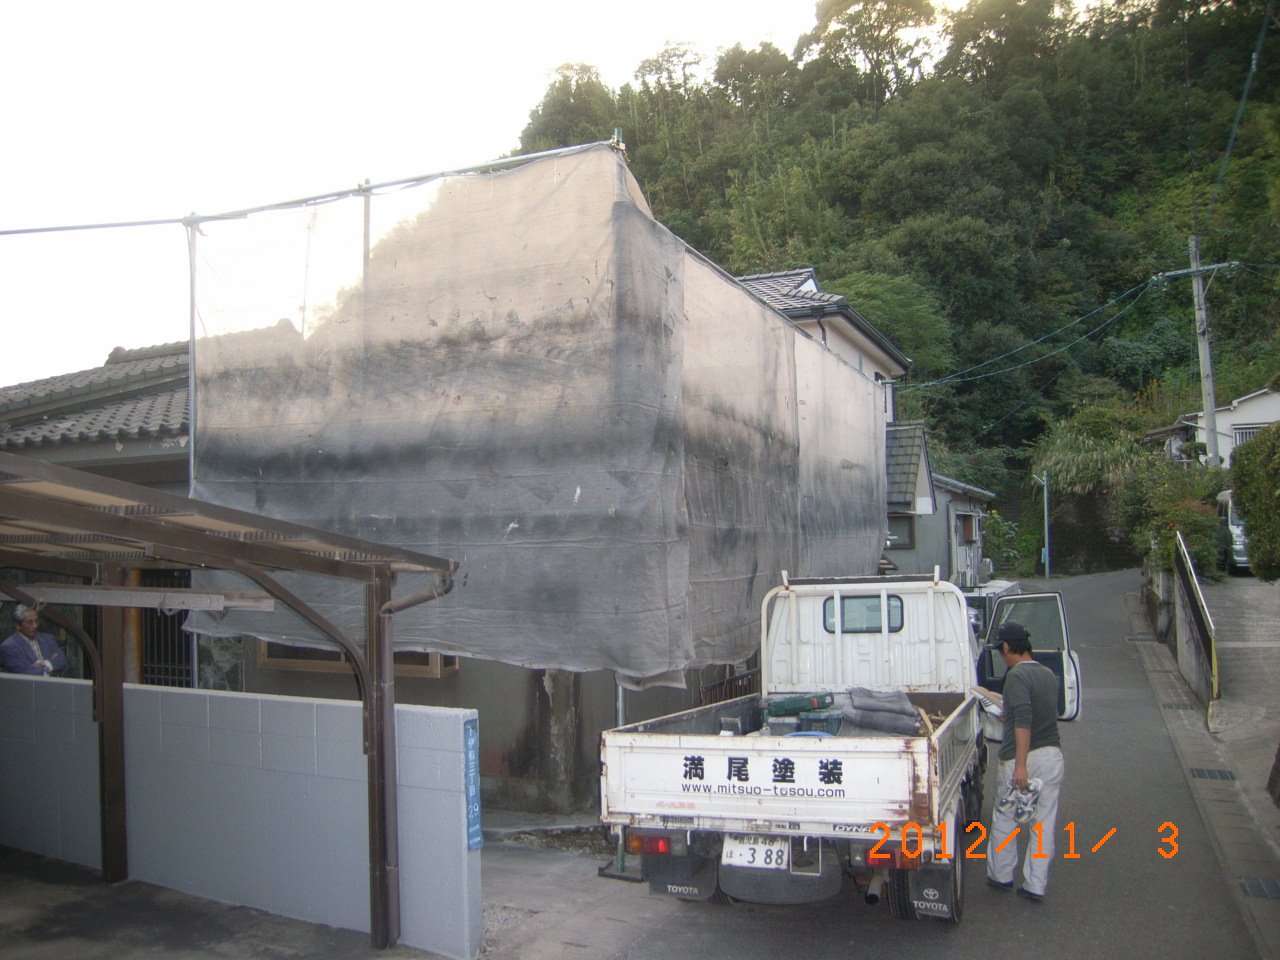 http://www.mitsuo-tosou.com/blog/items/2012/11/08/RIMG0017.JPG